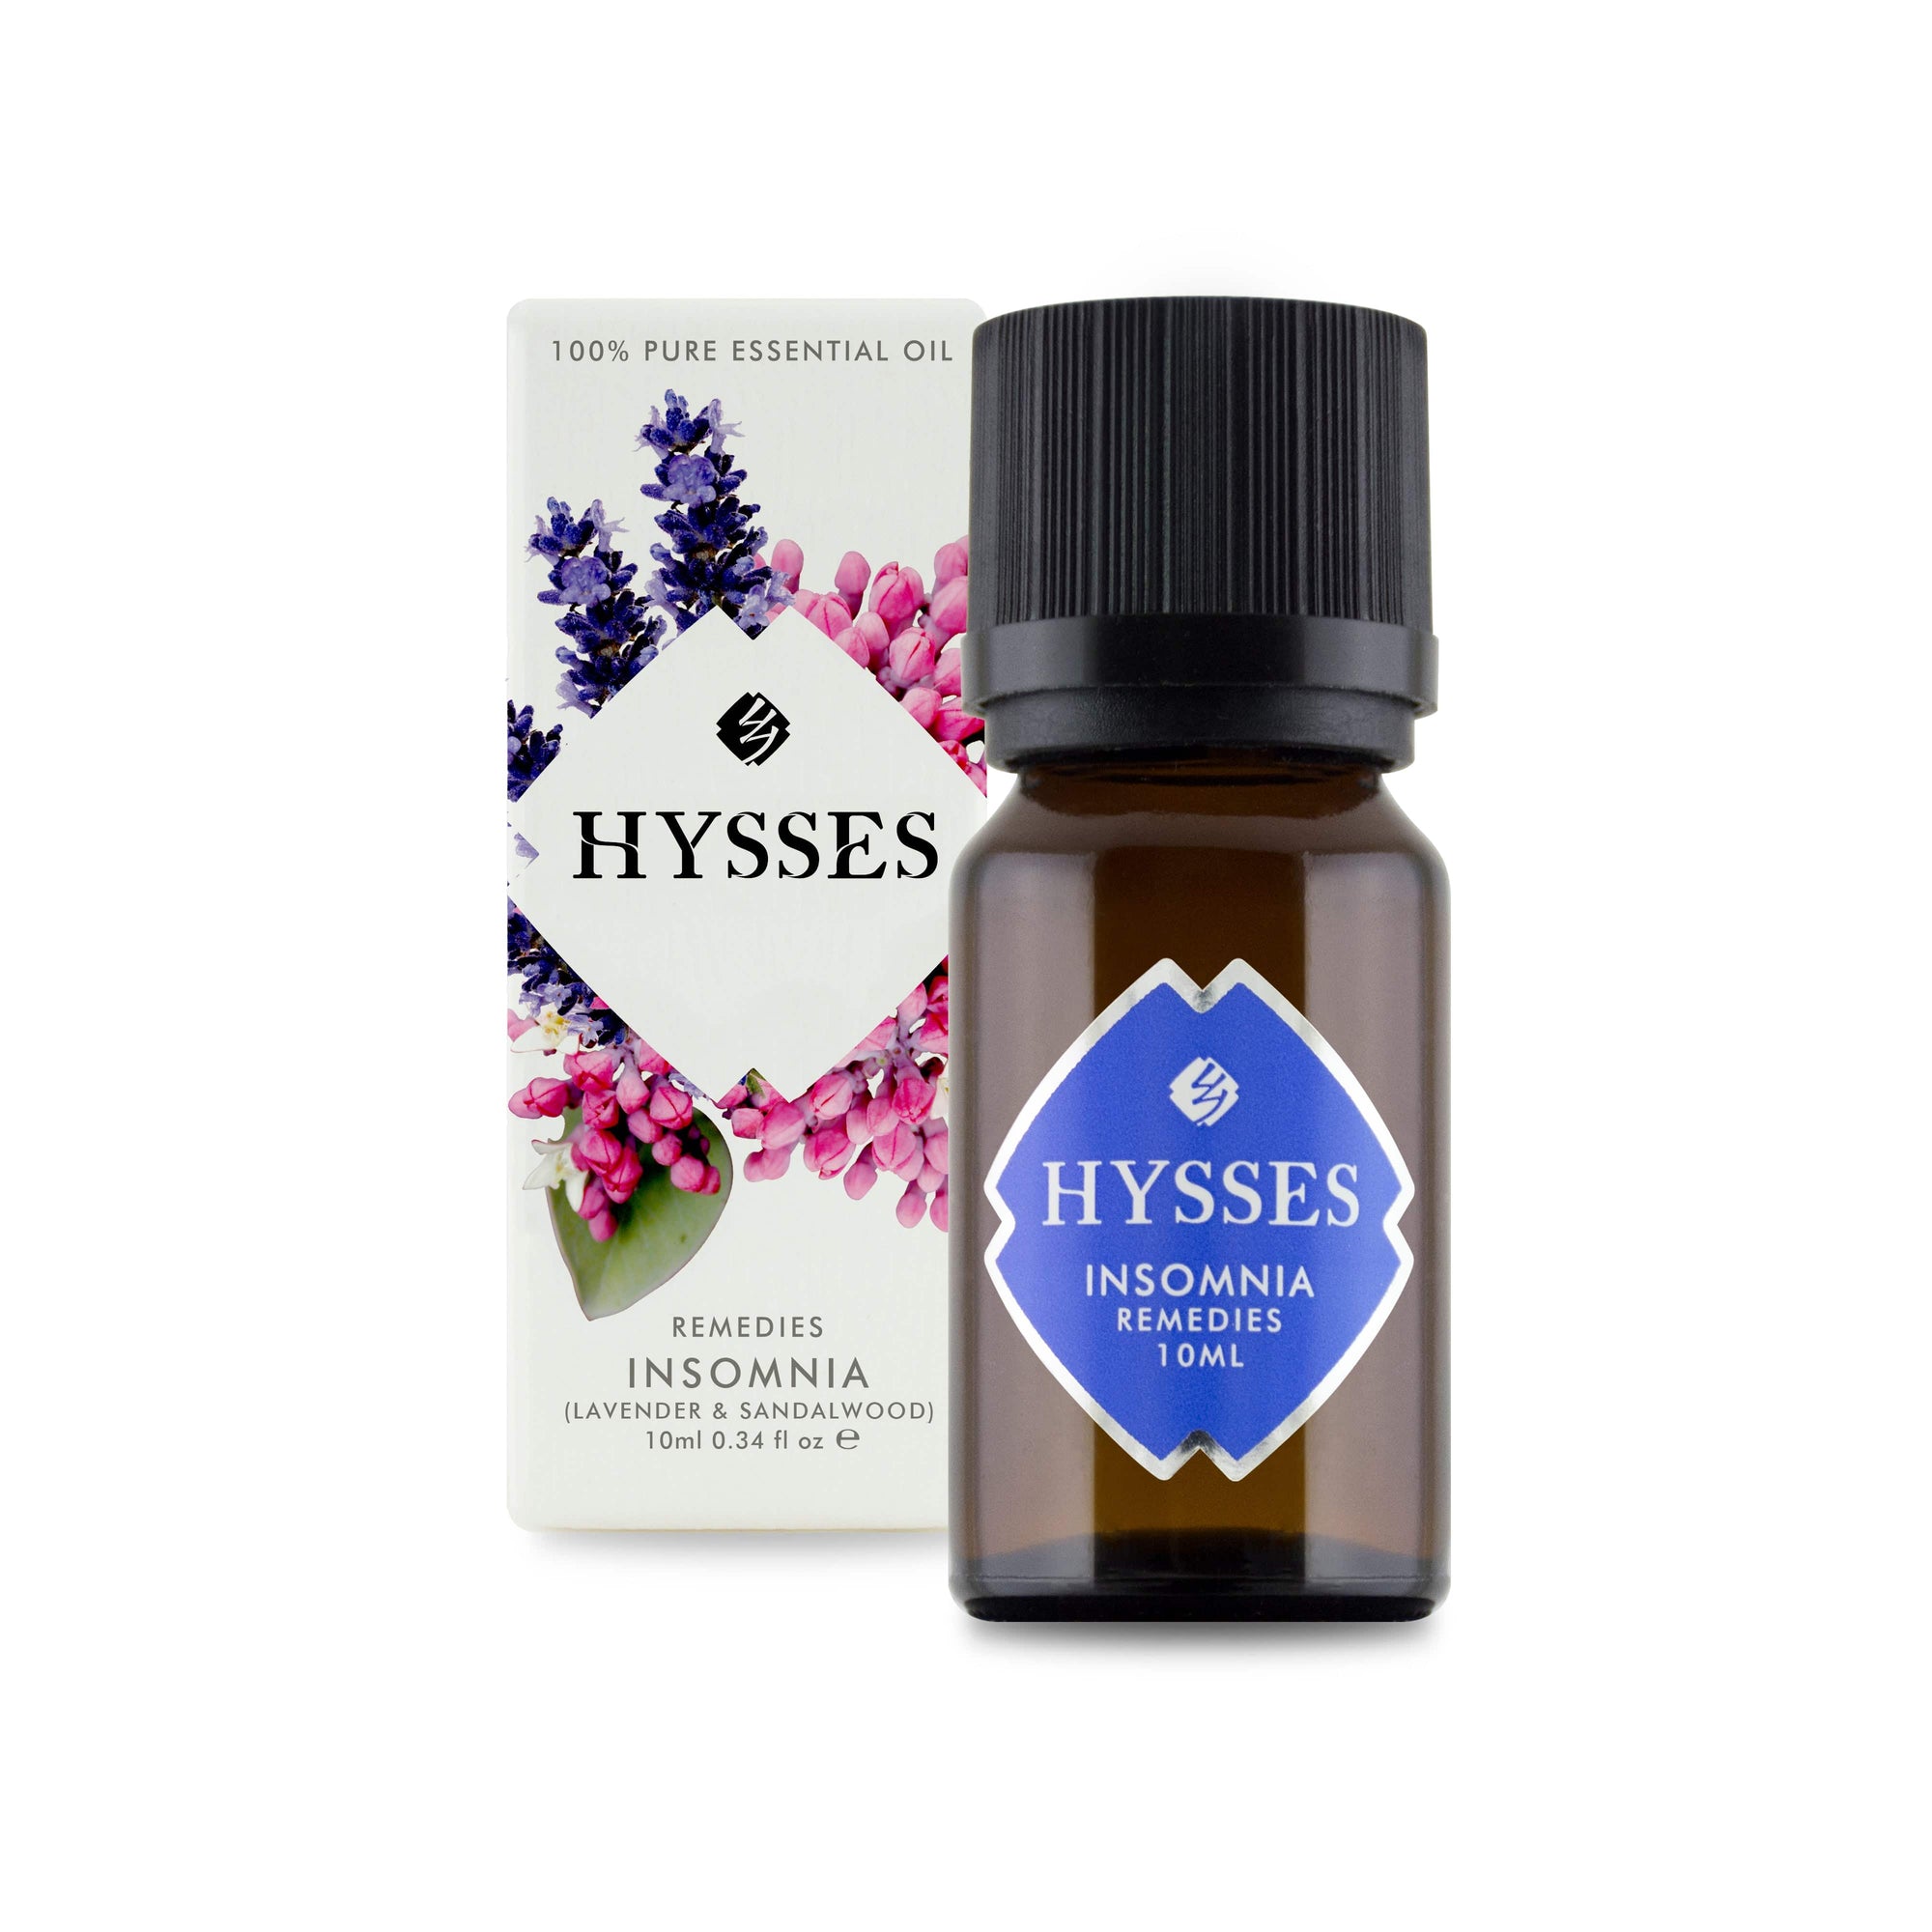 Hysses Essential Oil 10ml Remedies, Insomnia (Lavender & Sandalwood)